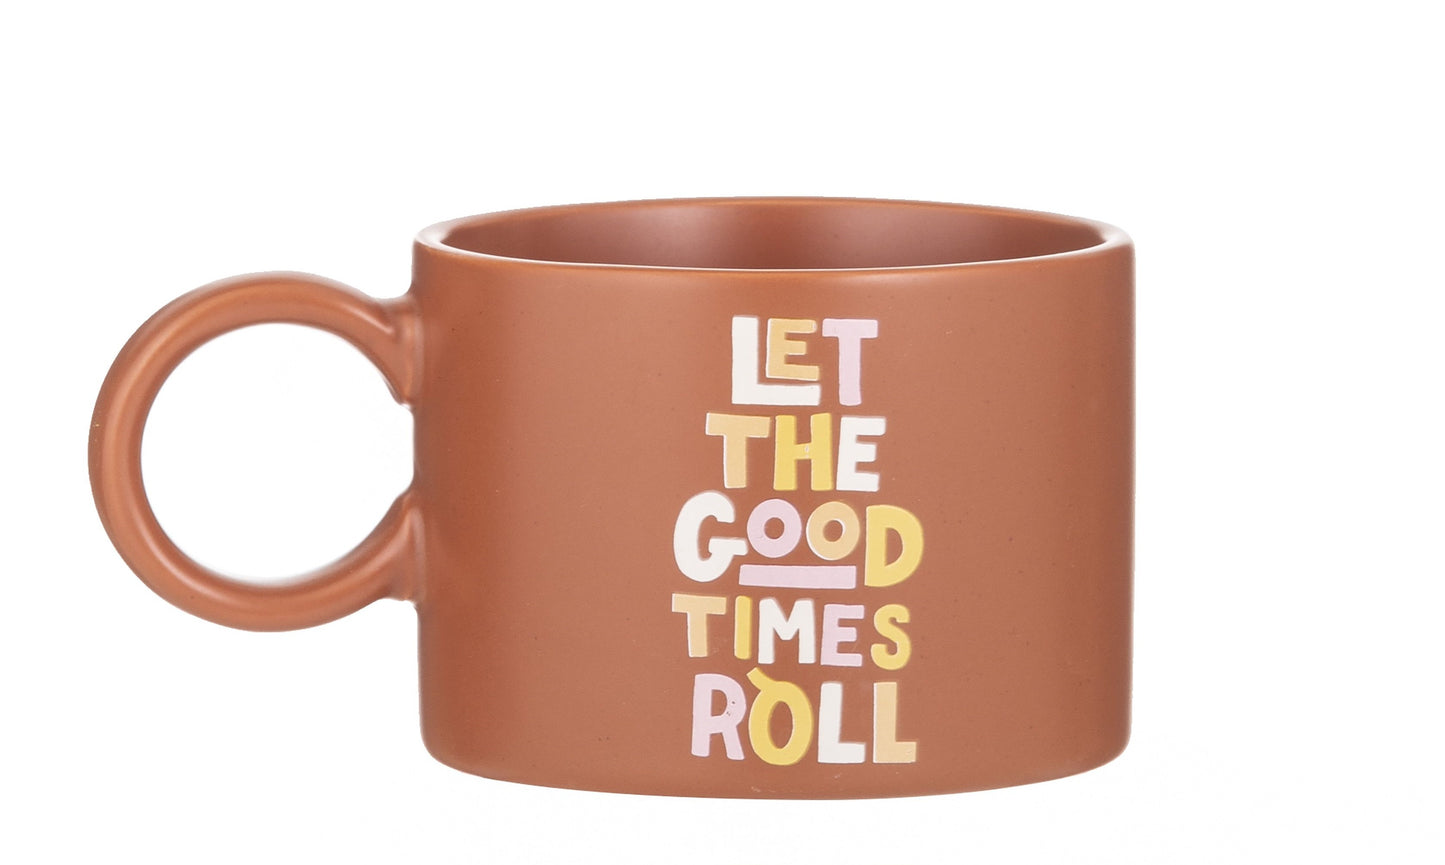 Let the good times roll mug